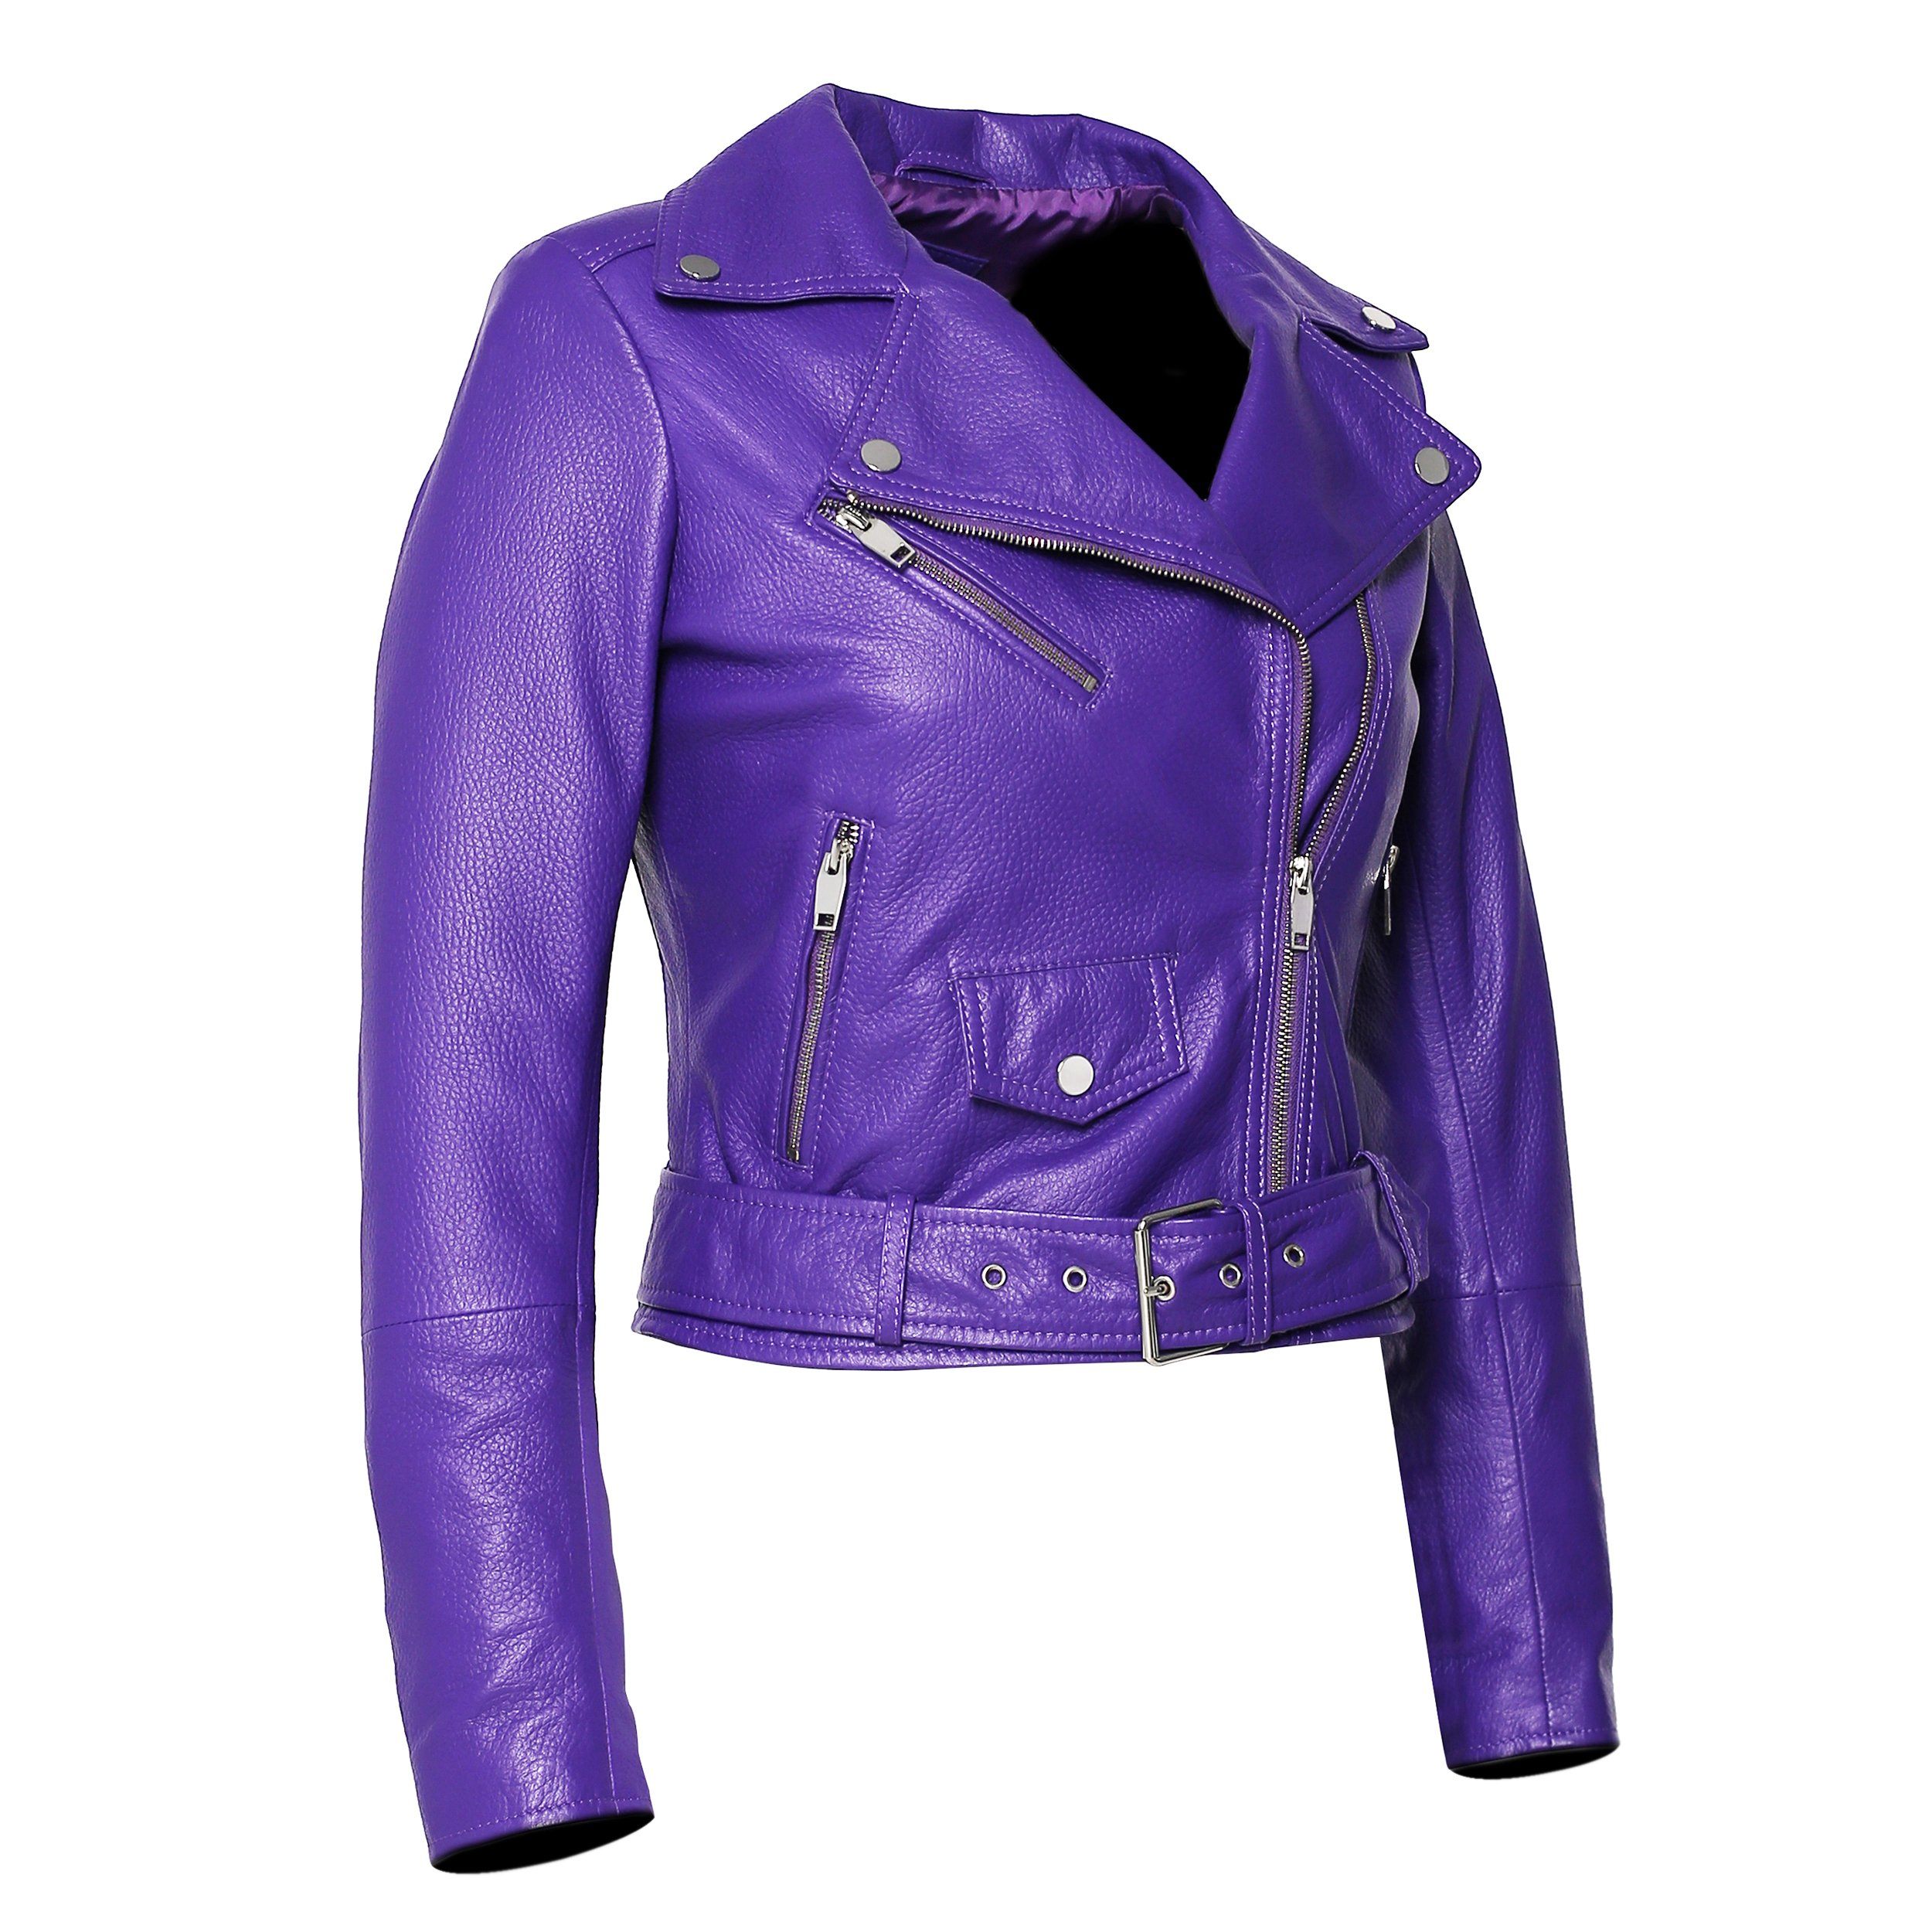 Women's Clothing - Embossed Monogram Reversible Jacket - Purple